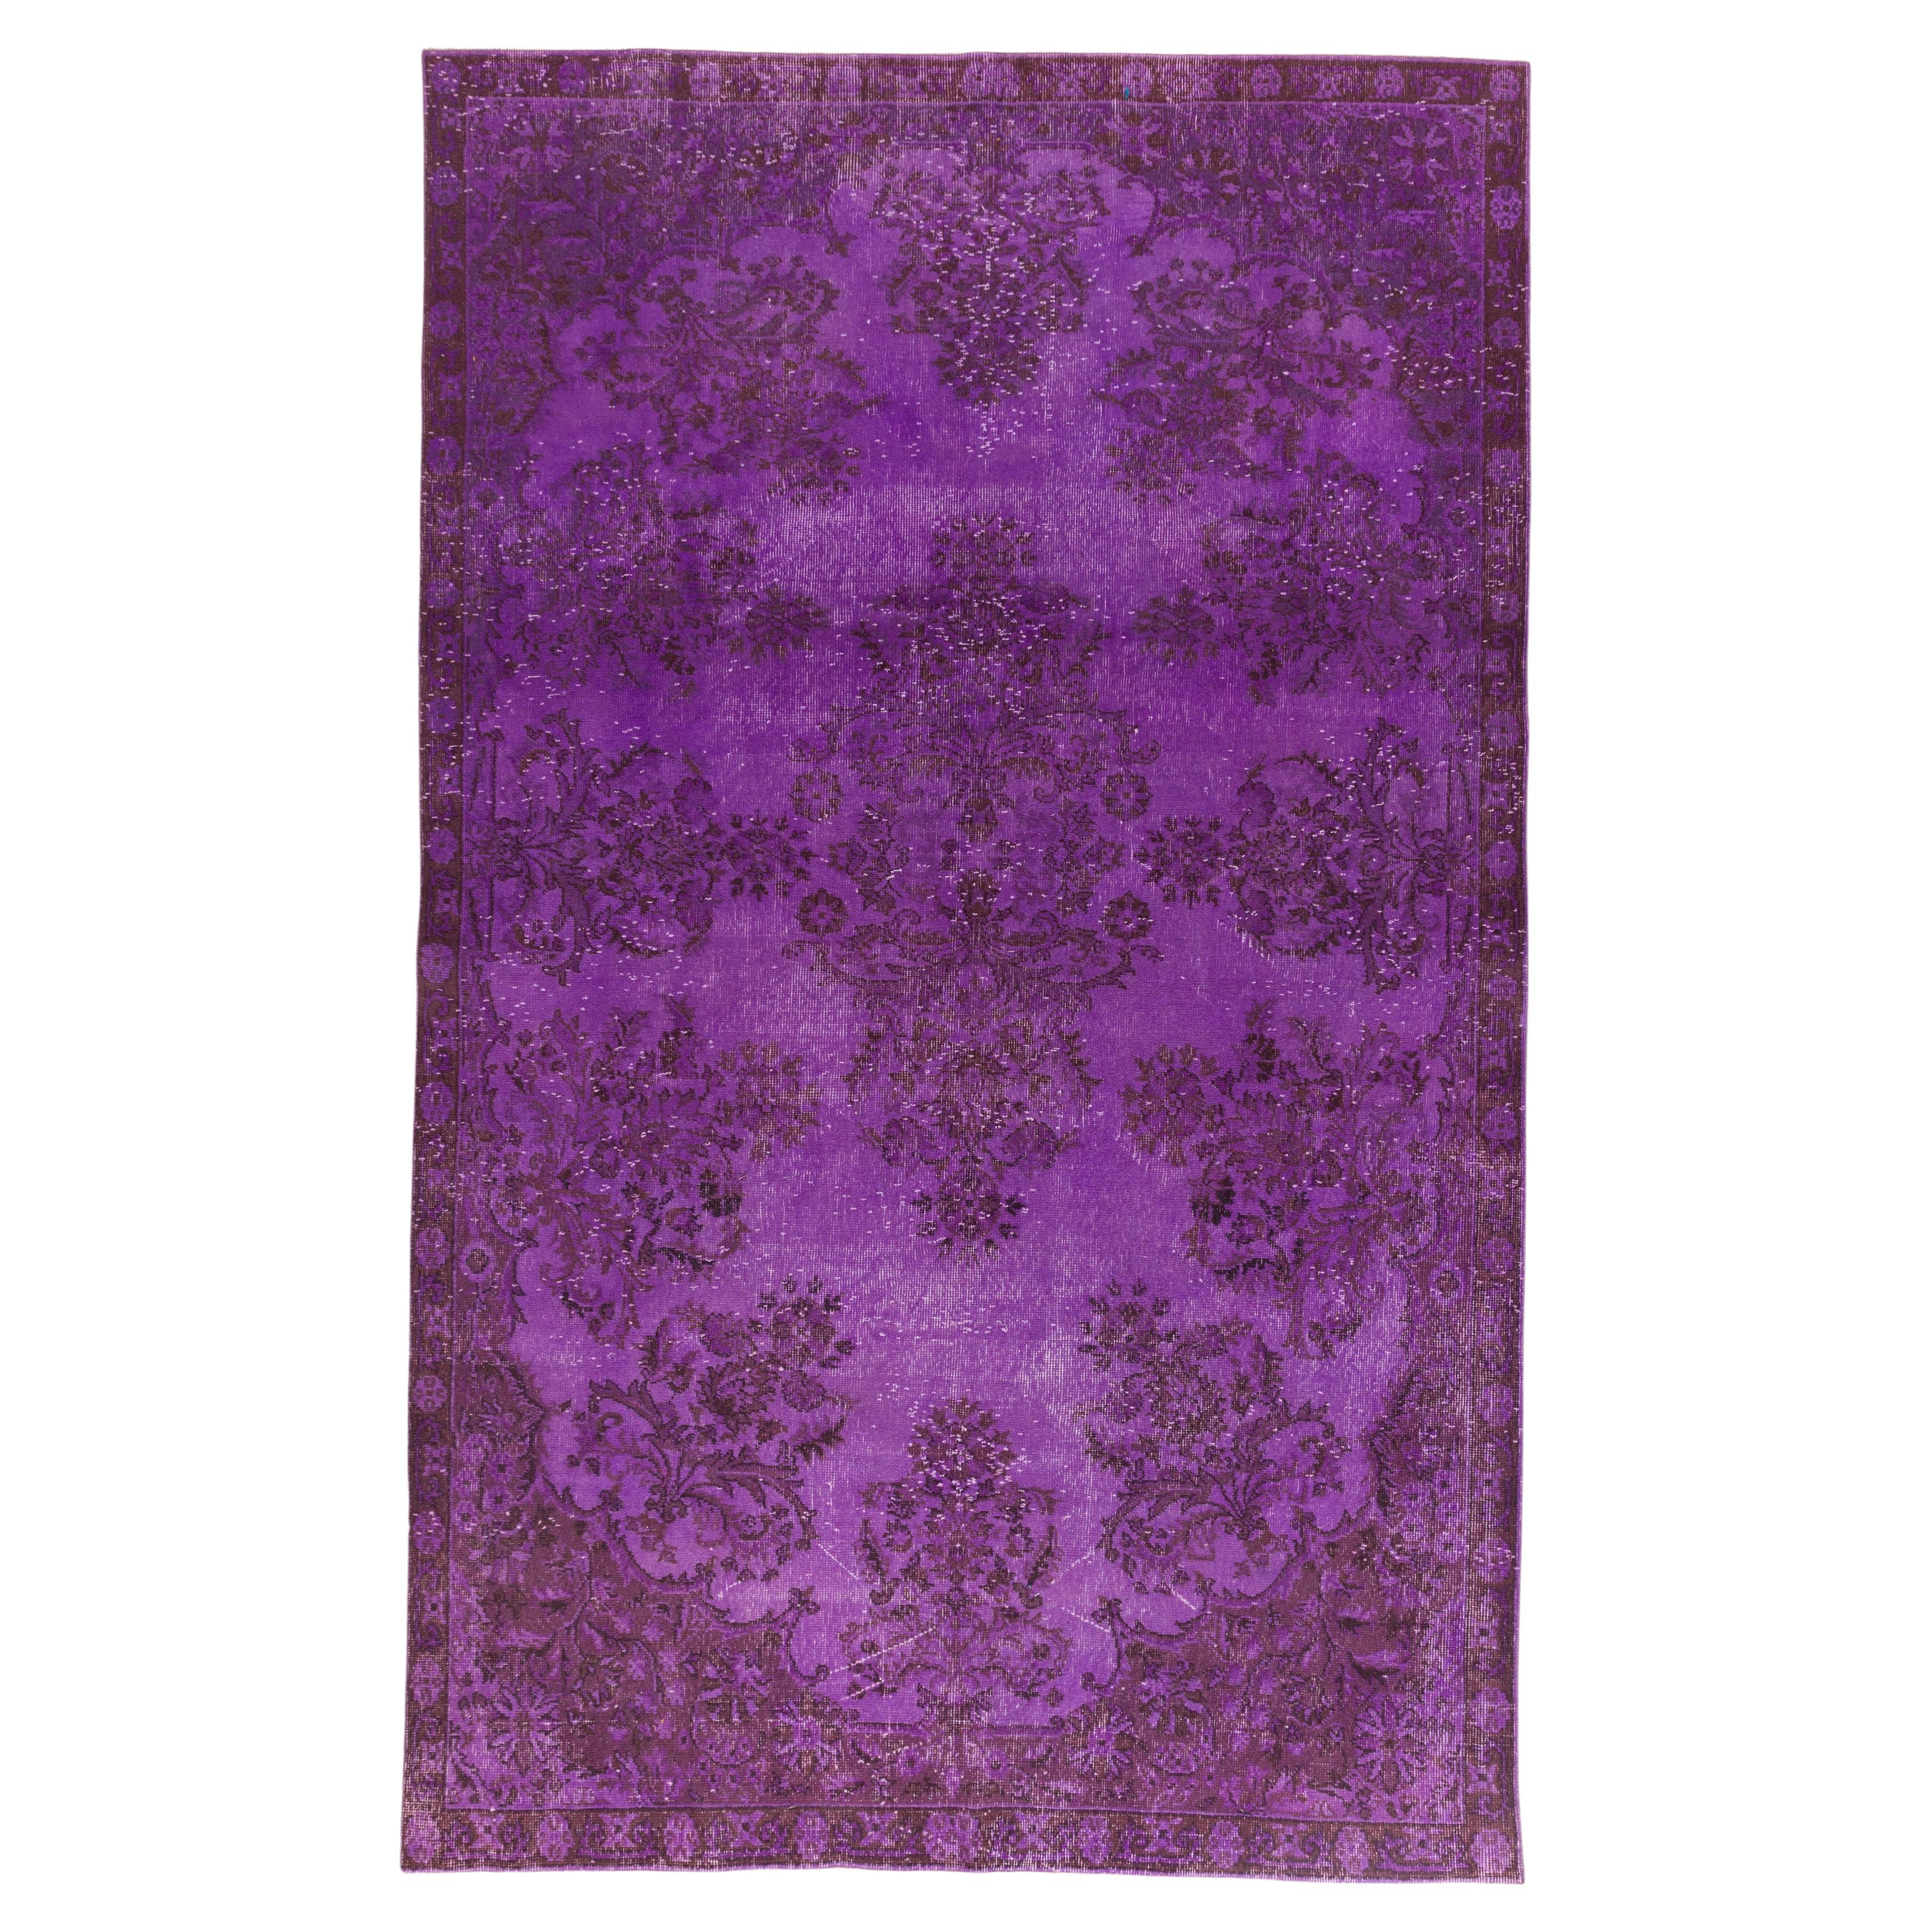 6.2x10.2 Ft Handmade Turkish Rug in Purple. Floral Garden Design Wool Carpet For Sale